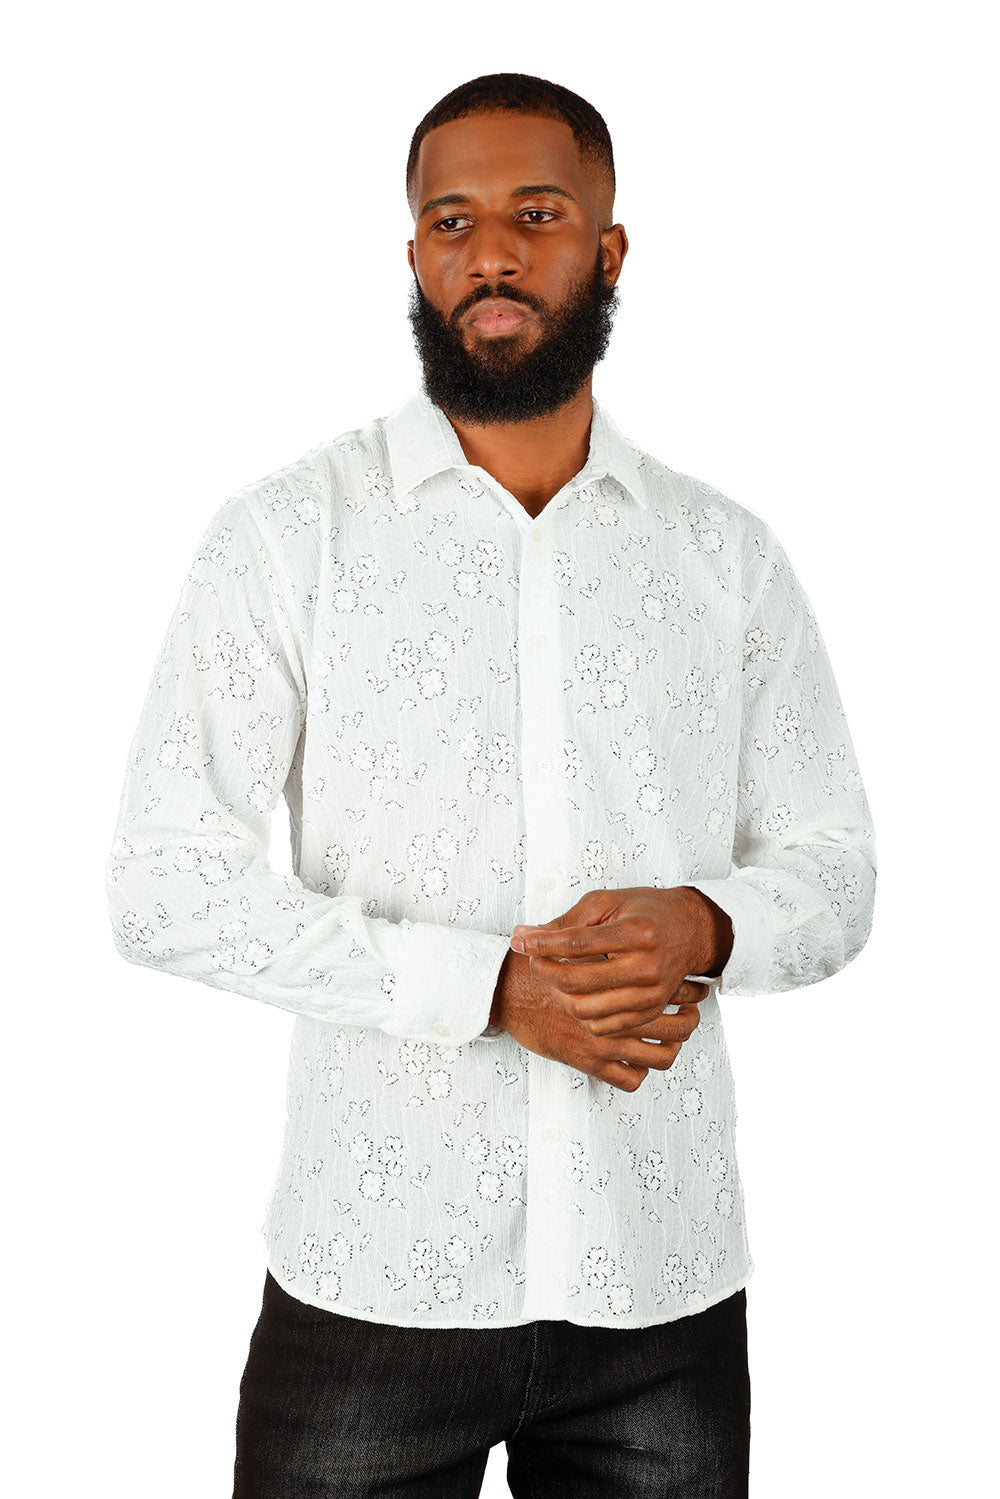 BARABAS Men's Lace See Through Stretch Sheer Long Sleeve Shirts 3B25 White